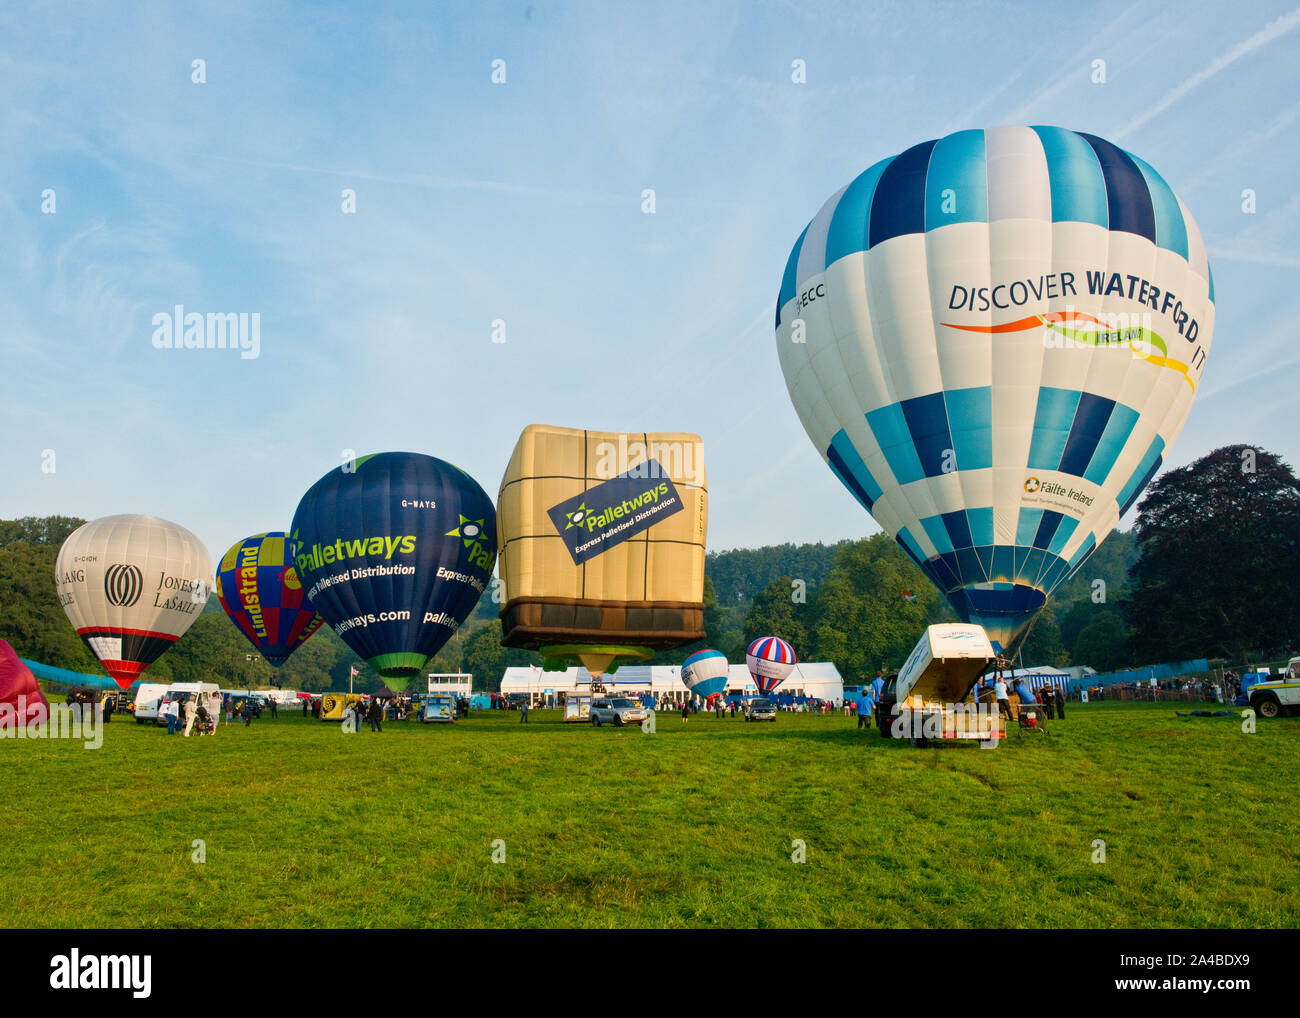 La ville de Waterford 'Discover' ballon à air chaud. Bristol International Balloon Fiesta, en Angleterre. Banque D'Images